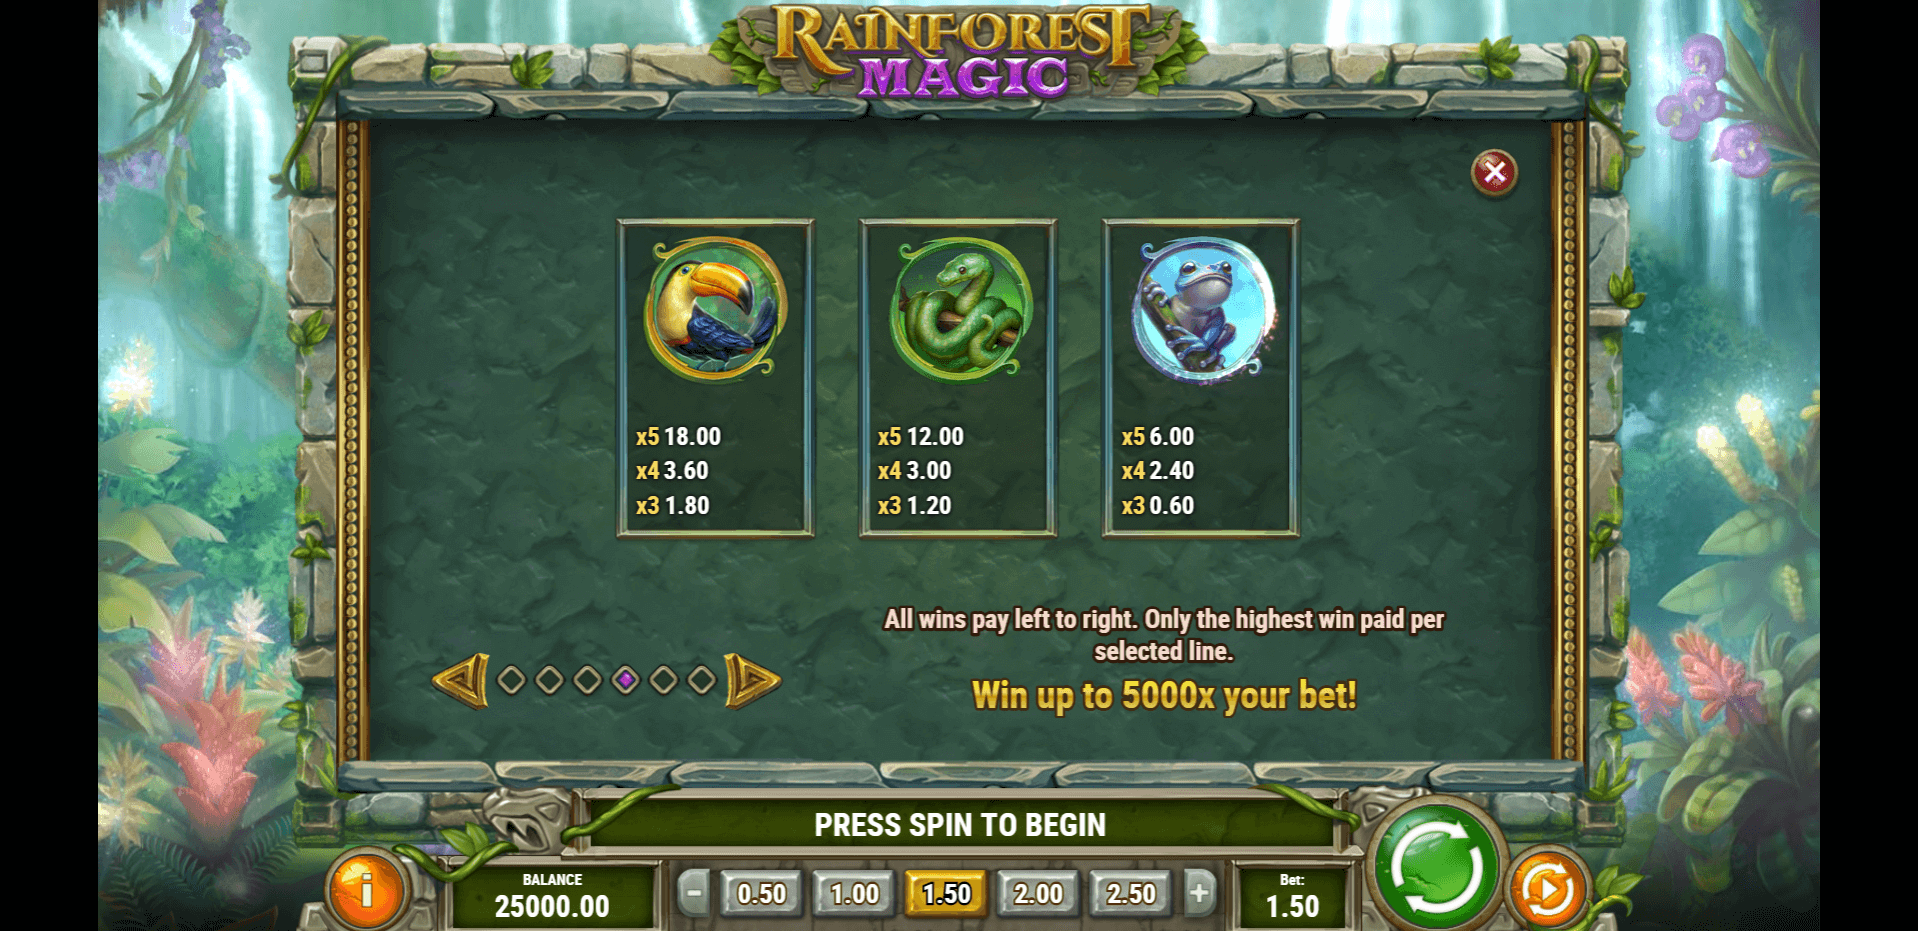 rainforest magic slot machine detail image 3